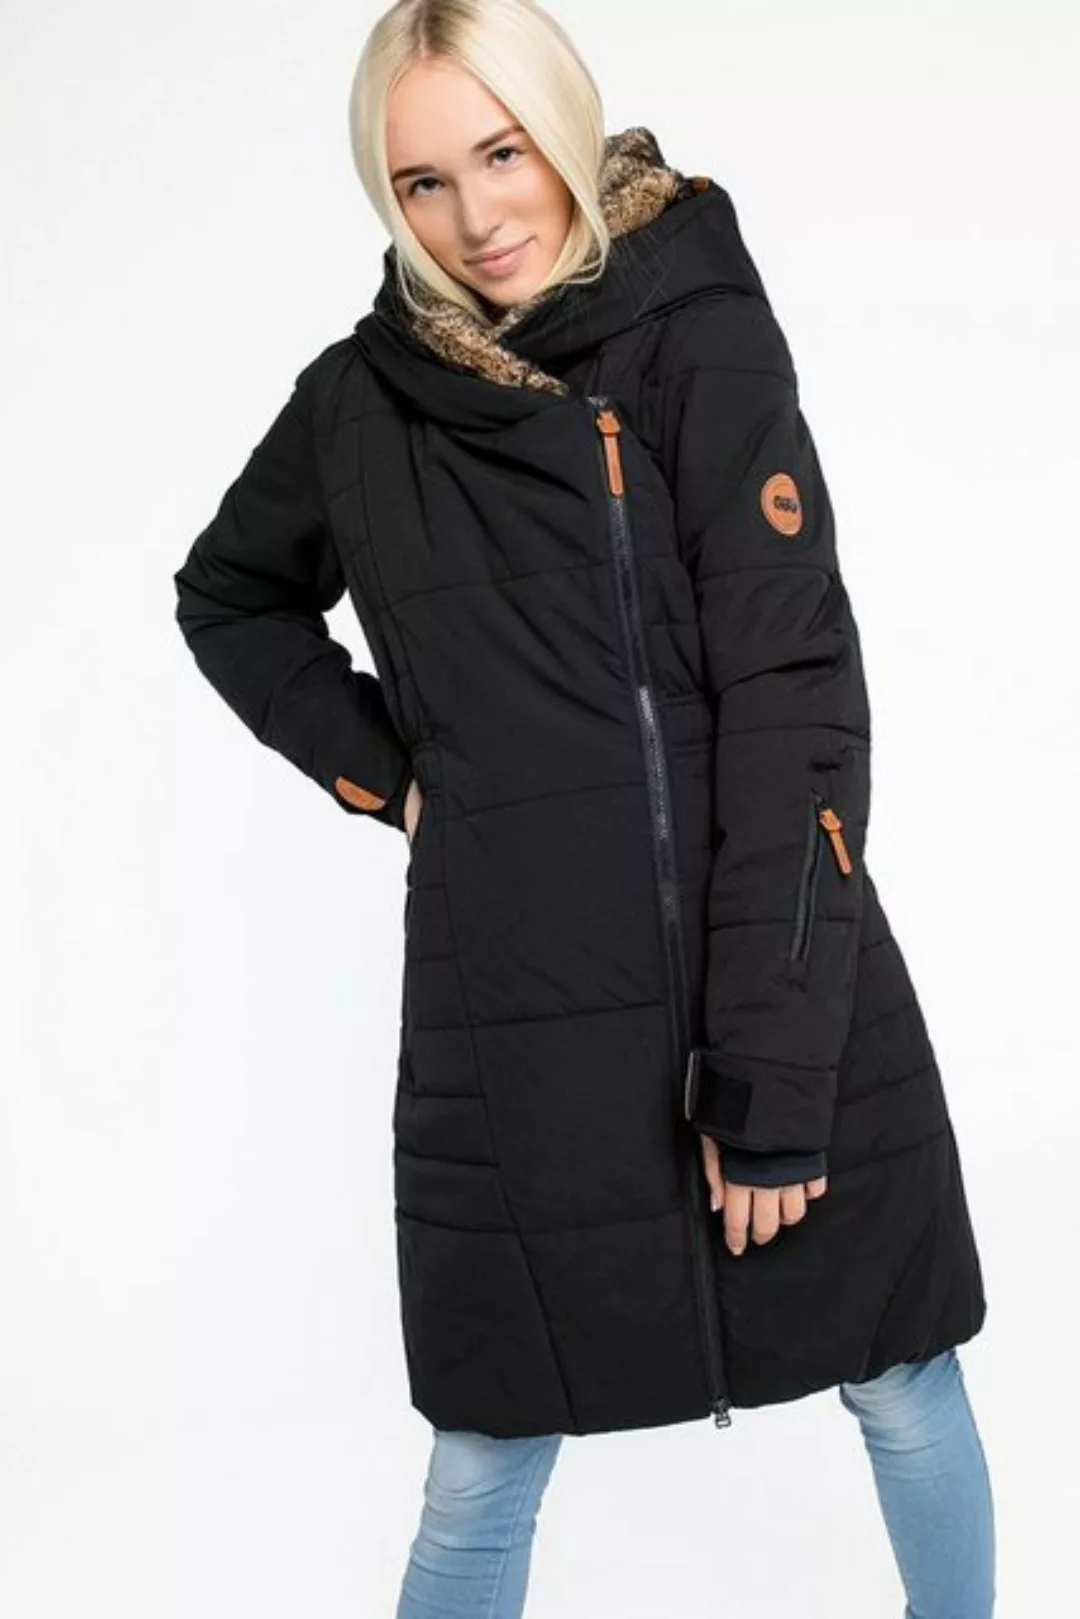 CNSRD Wintermantel FRIEDA Coat CS WOMEN Winterjacke & Damenmantel mit Rever günstig online kaufen